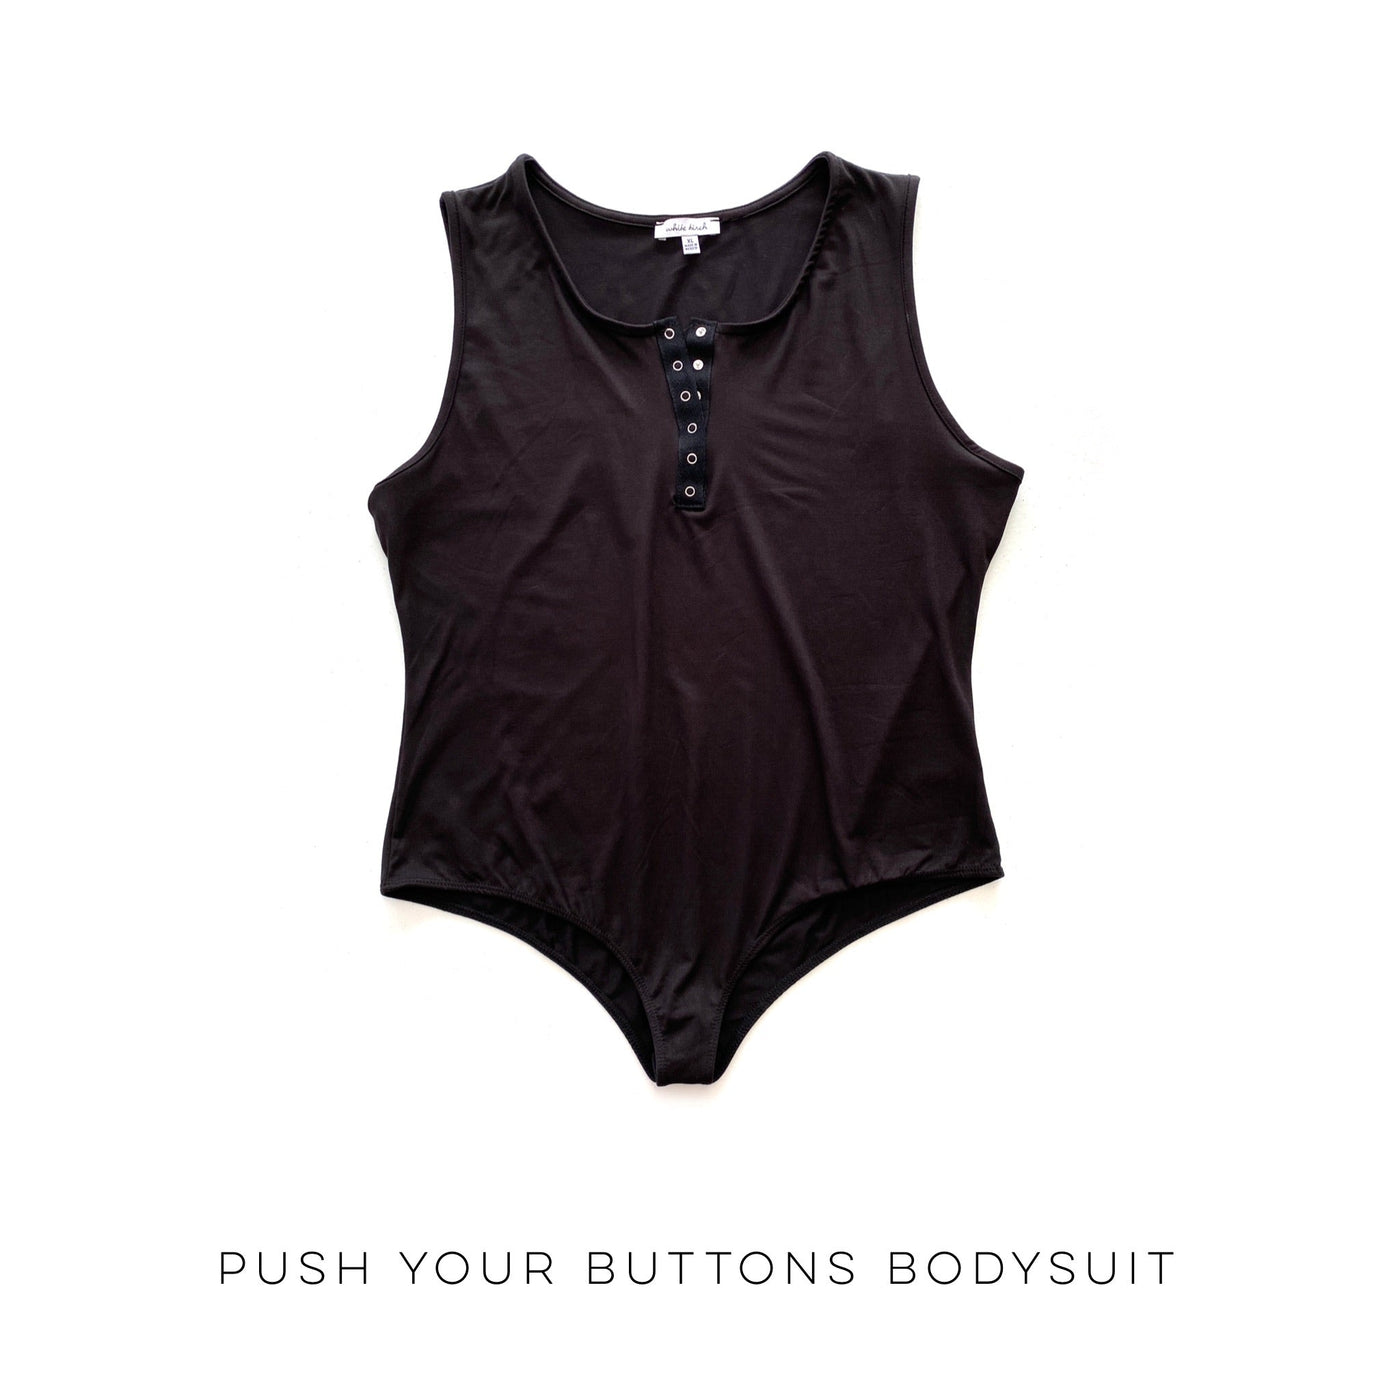 Push Your Buttons Bodysuit - Copper + Rose